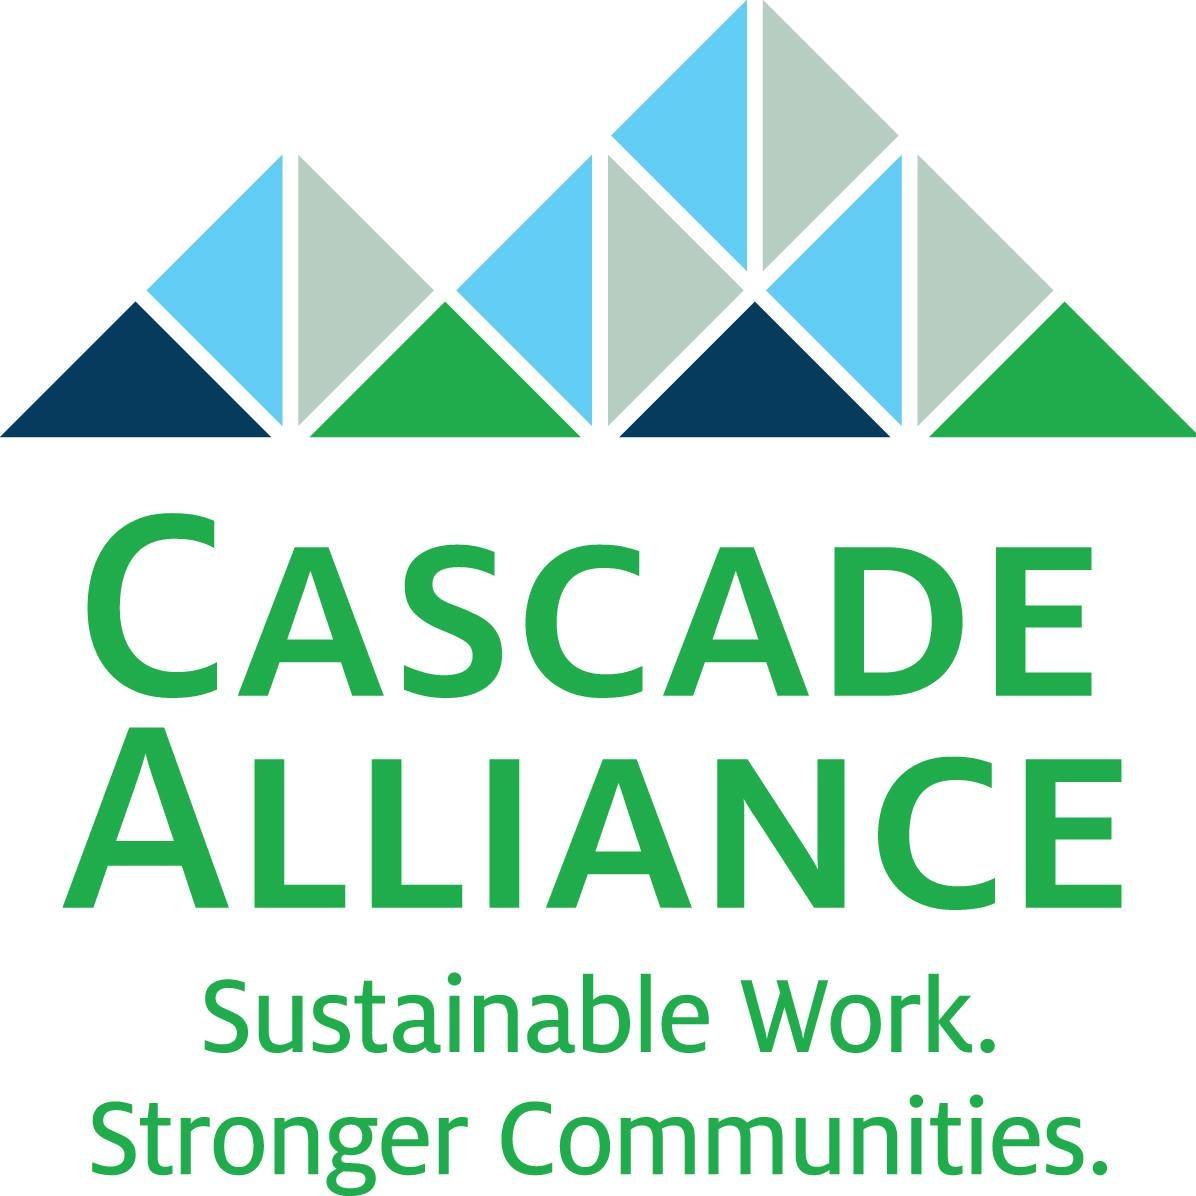 Cascade Alliance - Sustainable Work. Stronger Communities.